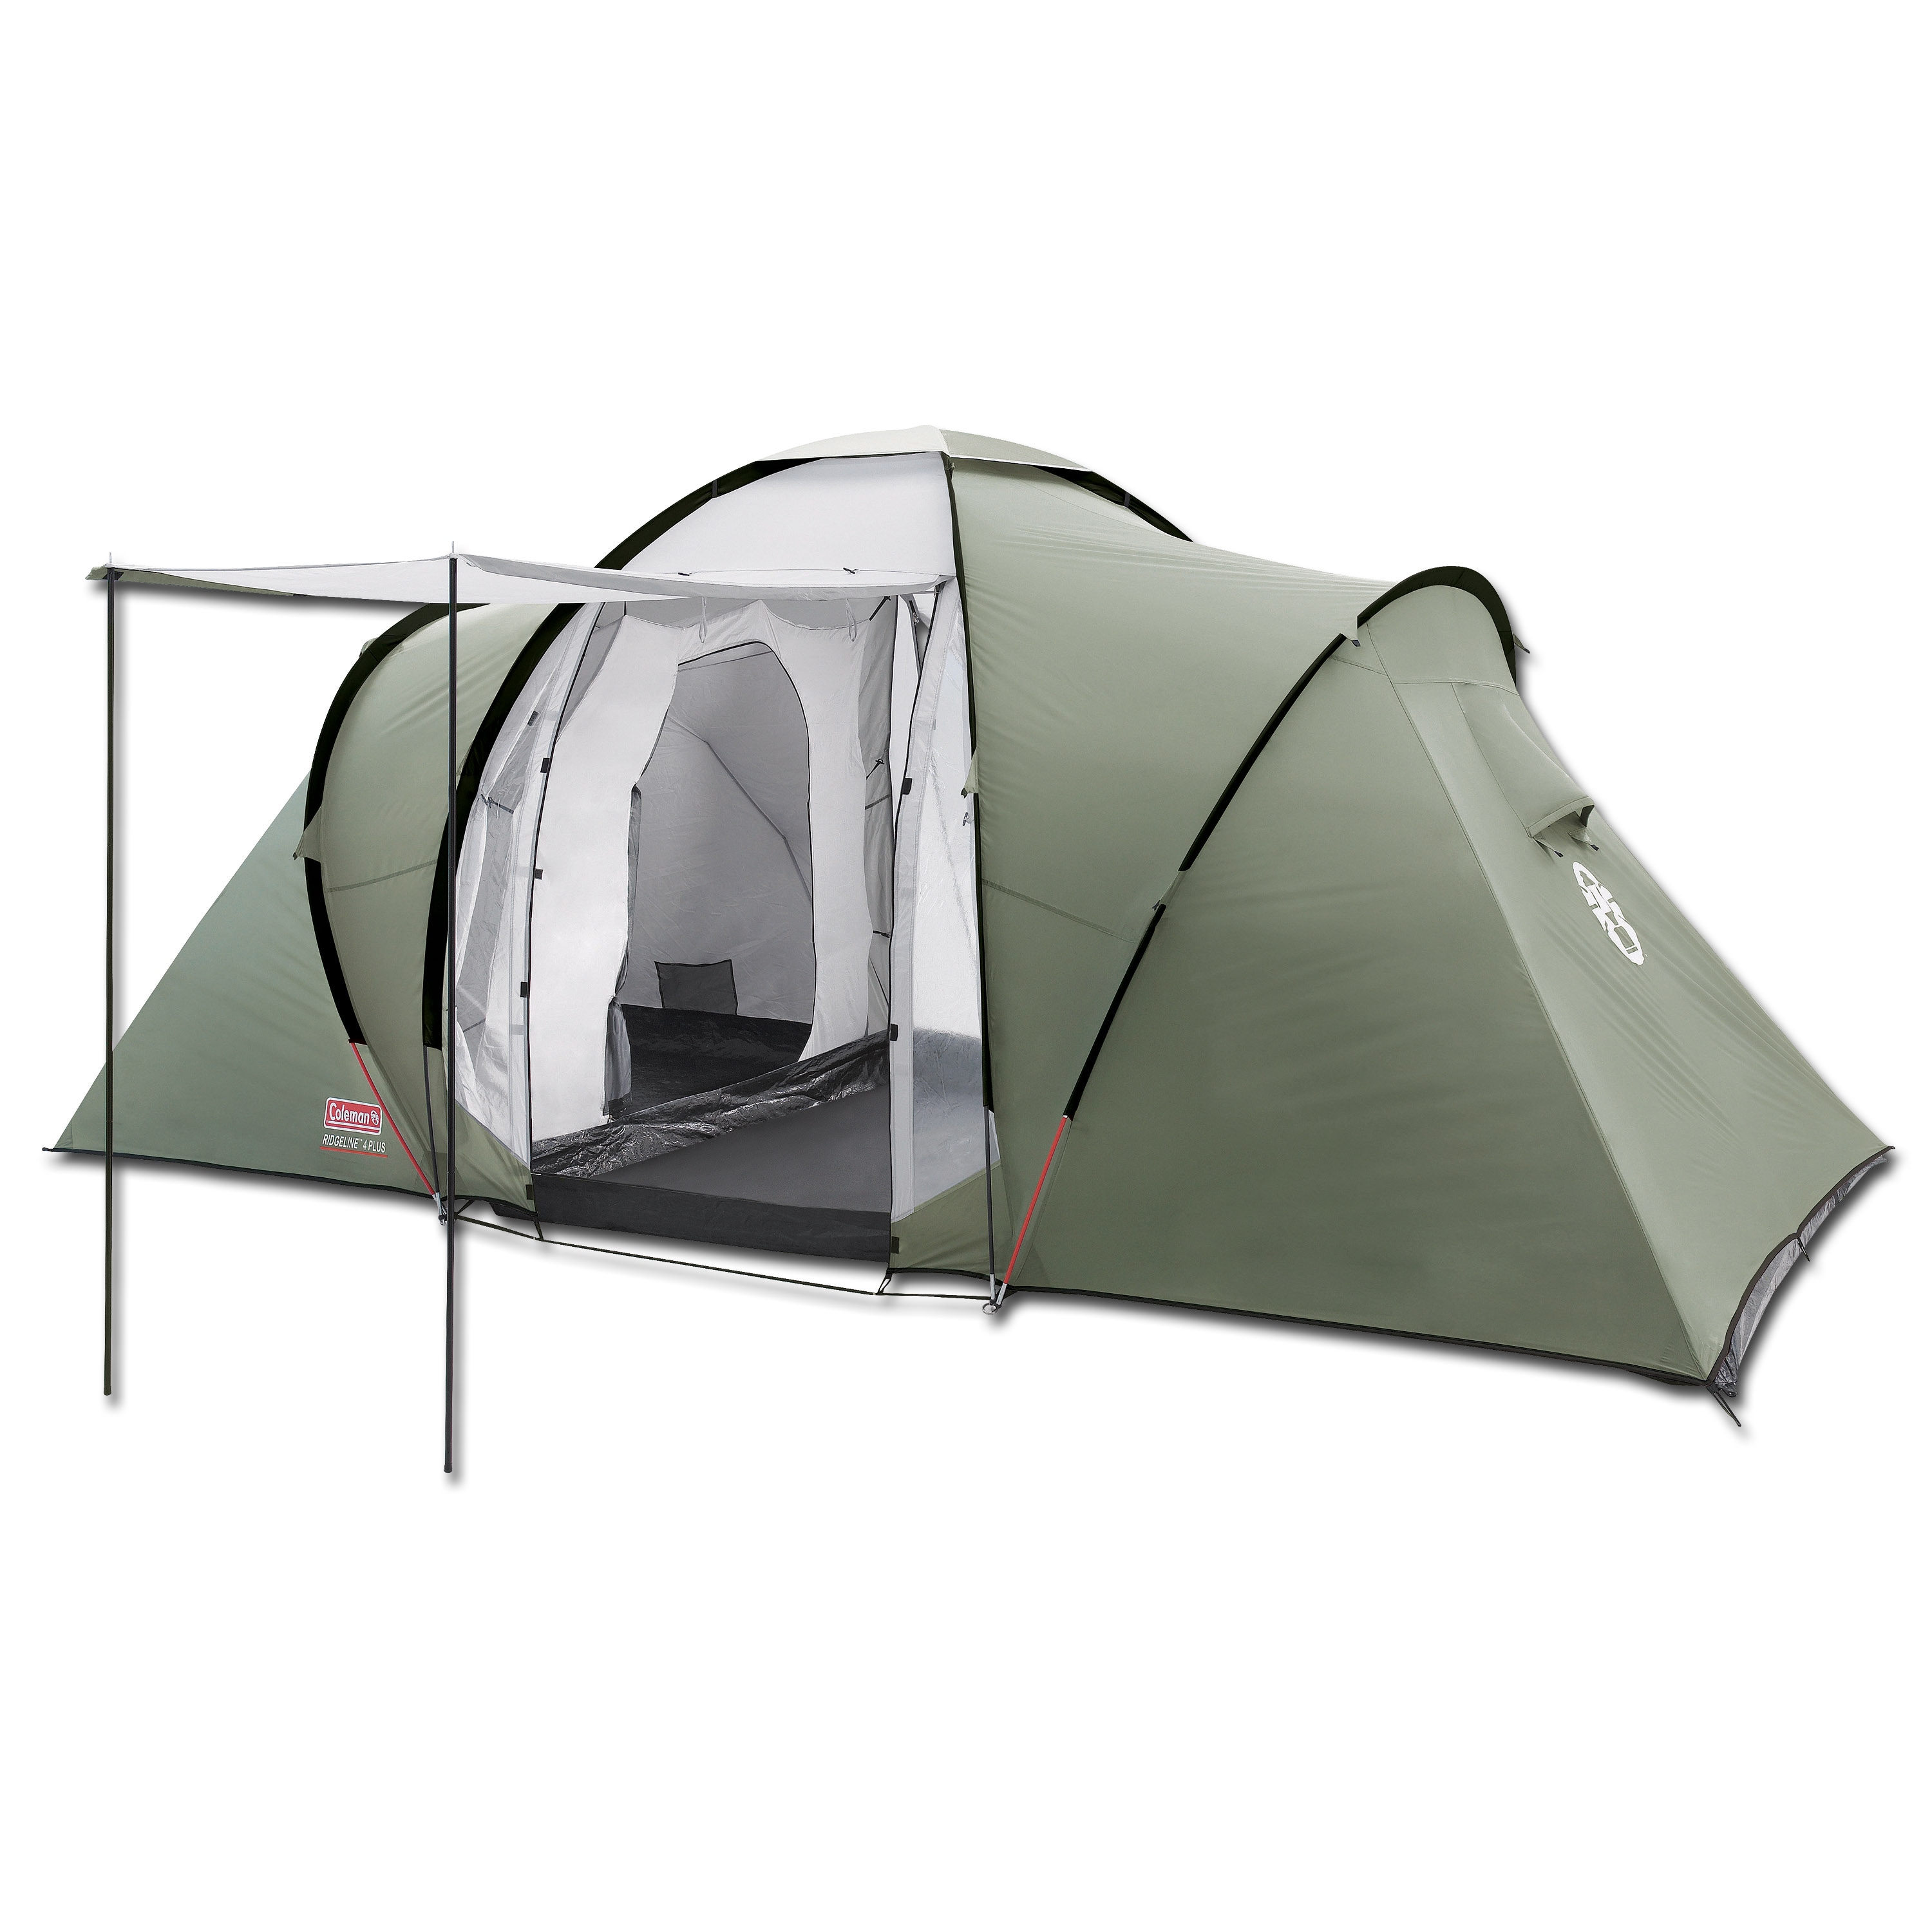 Magazijn Overwinnen Ansichtkaart Purchase the Tent Coleman Ridgeline 4 Plus olive green by ASMC